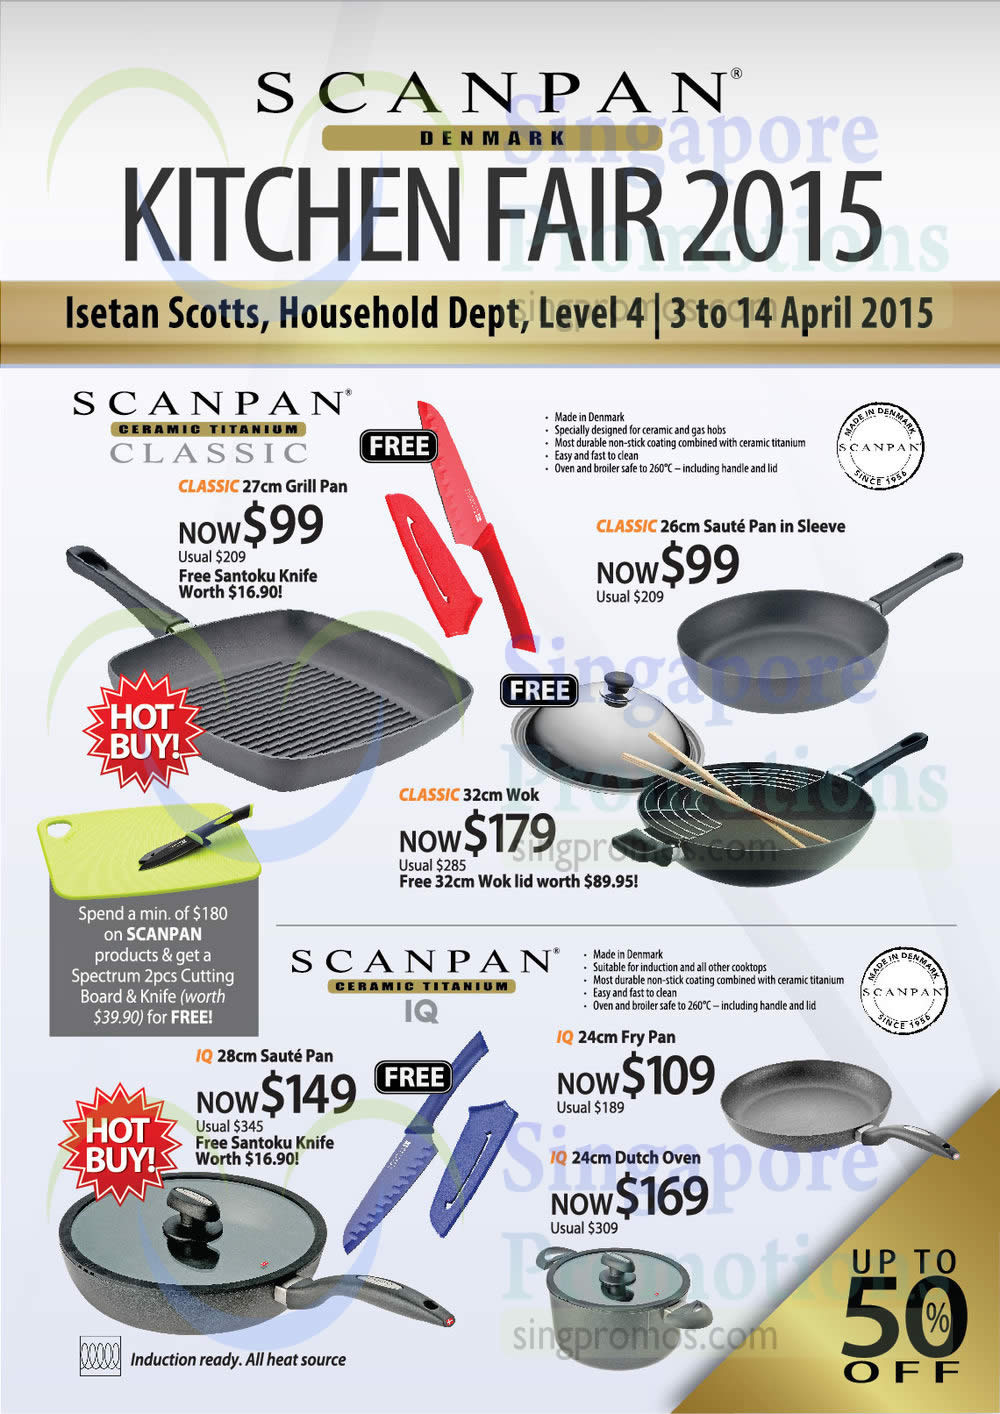 Featured image for Scanpan Kitchen Fair 2015 @ Isetan Scotts 3 - 14 Apr 2015